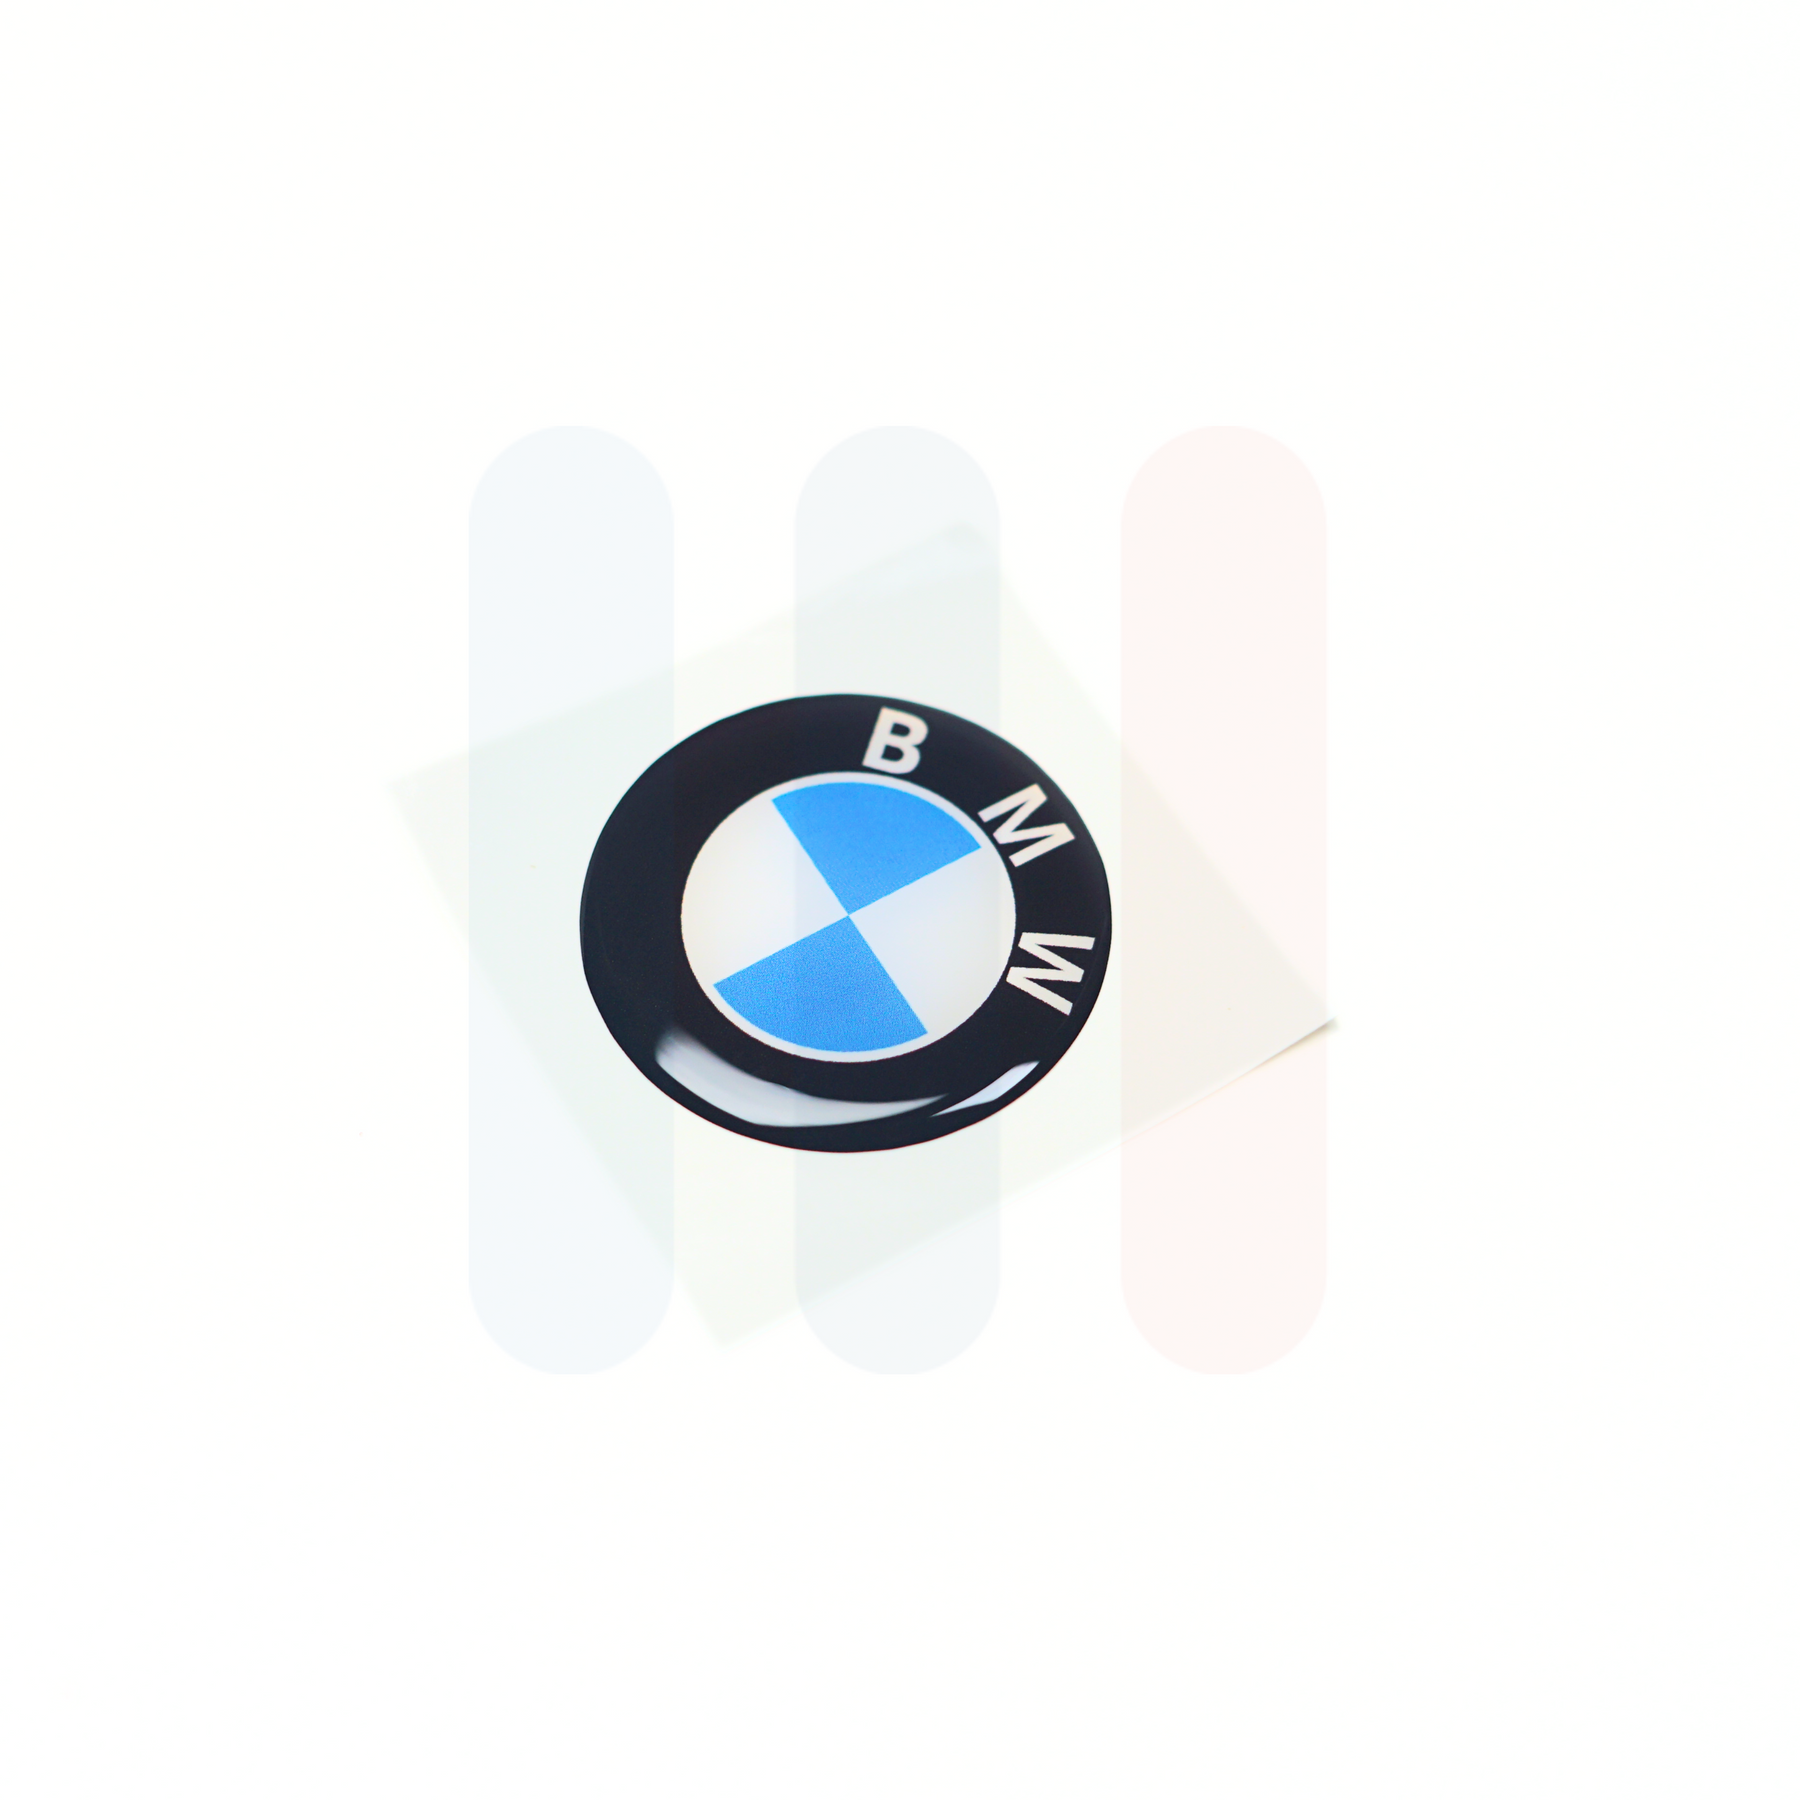 BMW Ratt Emblem (Chrome Delete)